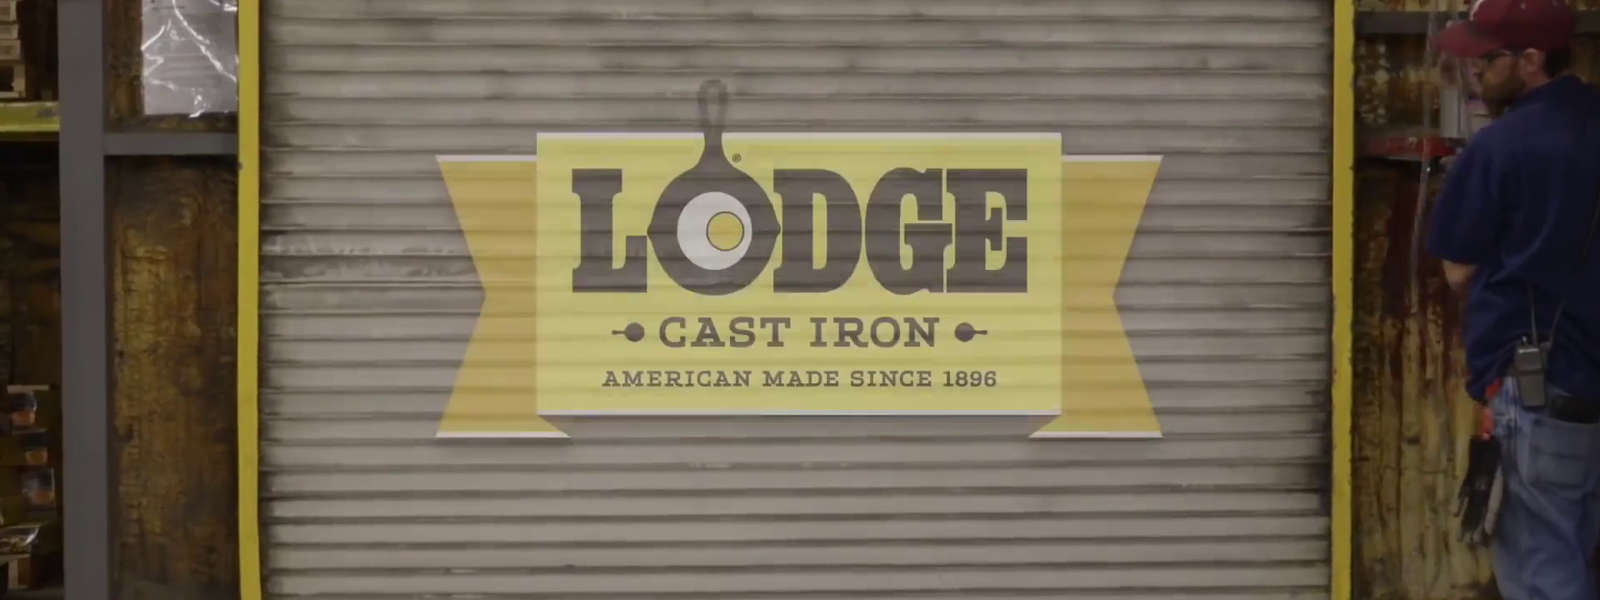 Made in America: NEW Lodge cast iron Yellowstone range - Kitchen